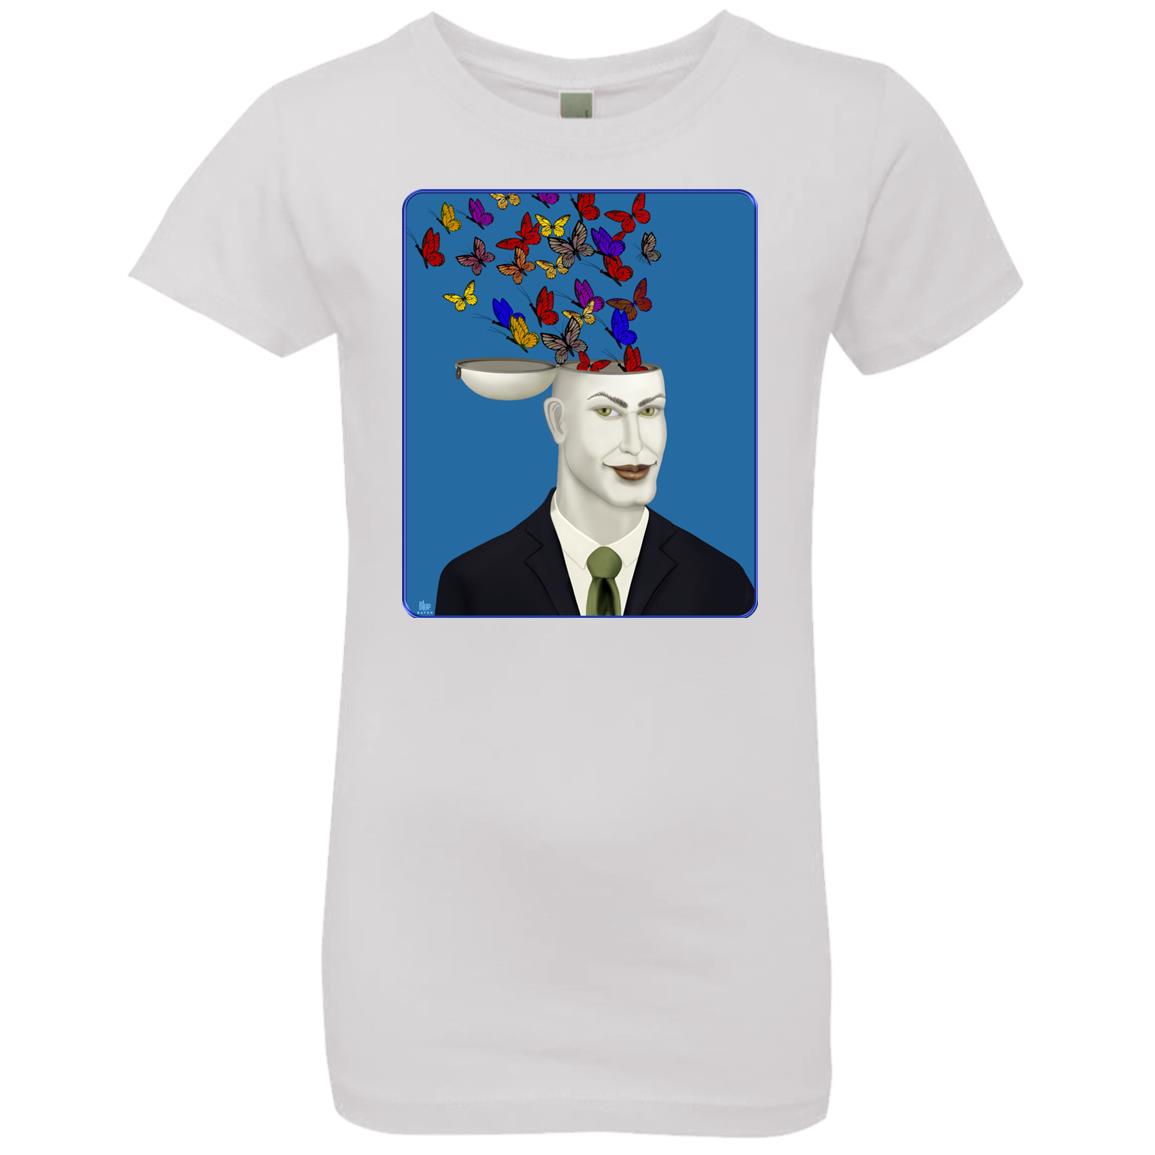 Let Creativity Fly - Girl's Premium Cotton T-Shirt